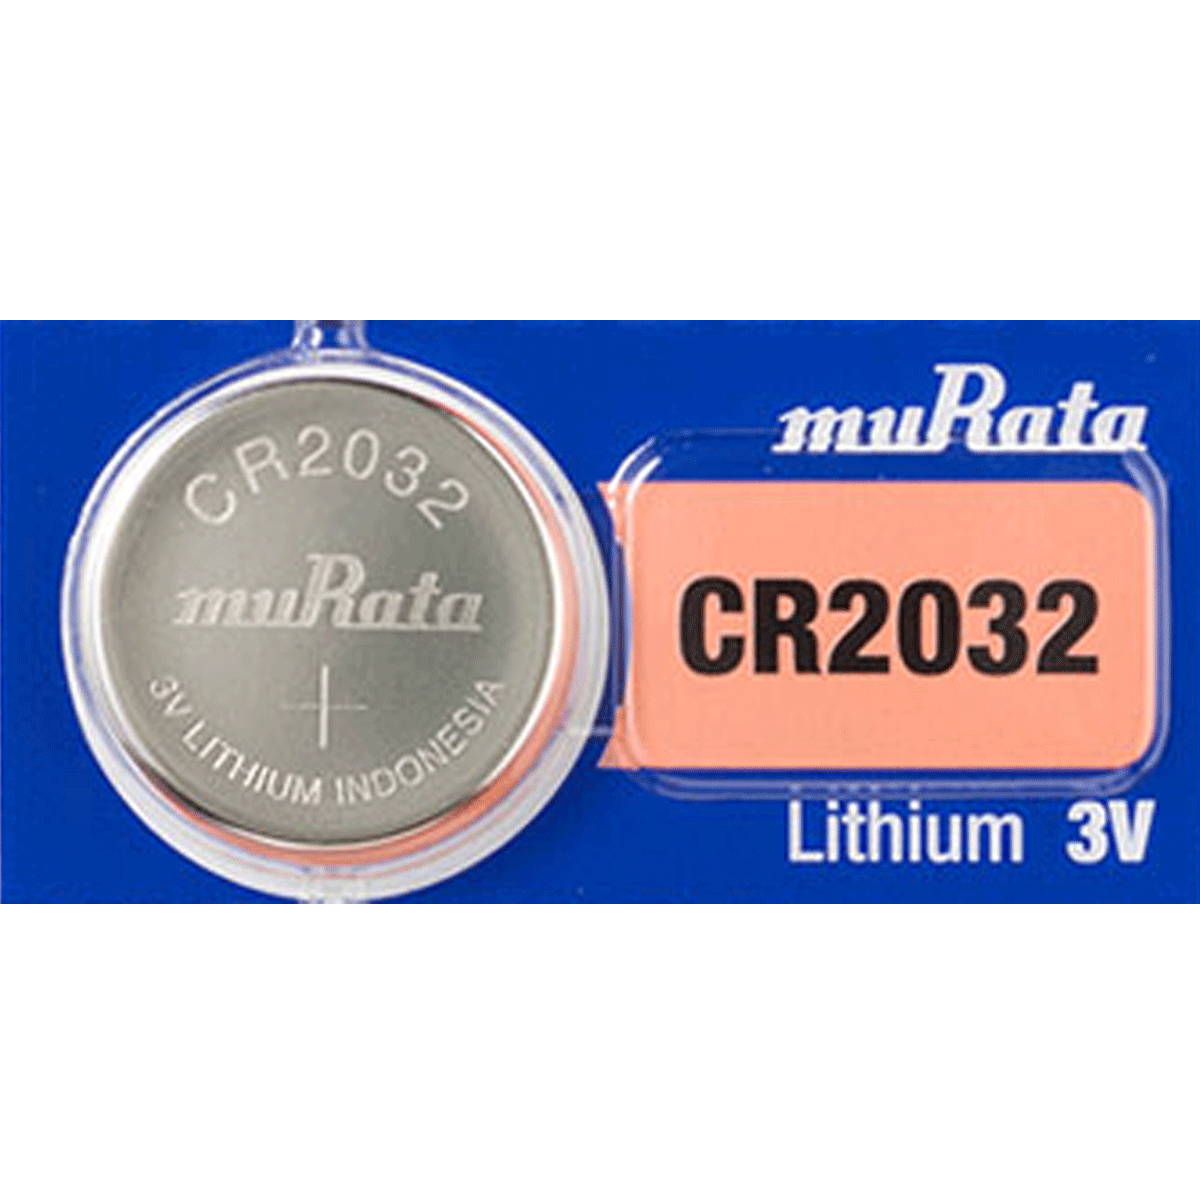 LR1130 Murata Electronics